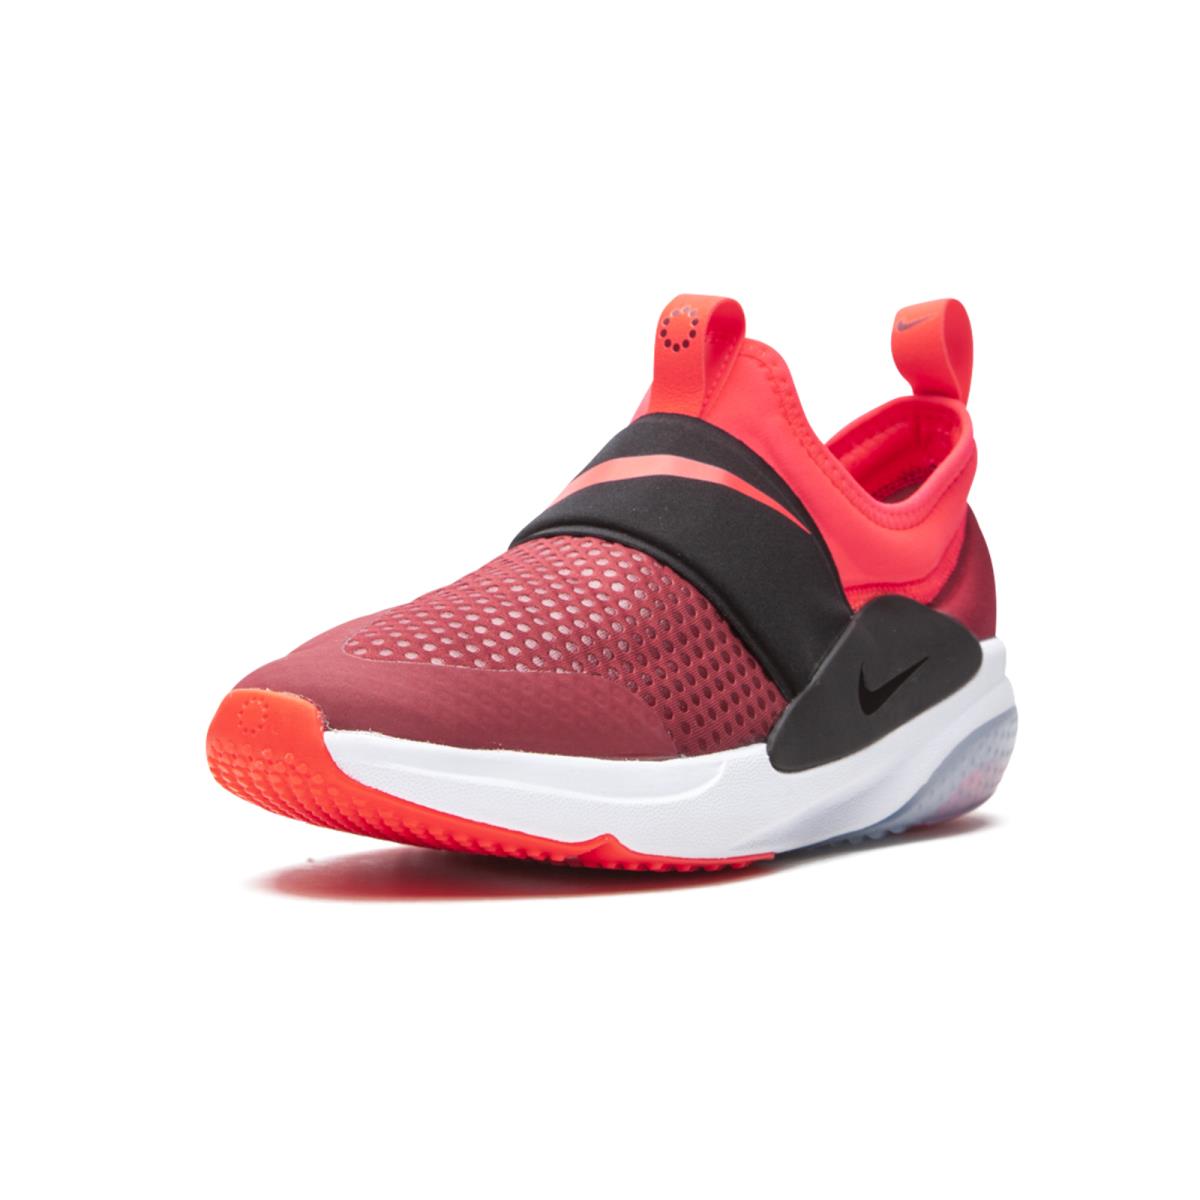 Nike shoes Joyride Nova - Team Red/Red Orbit-Black 4